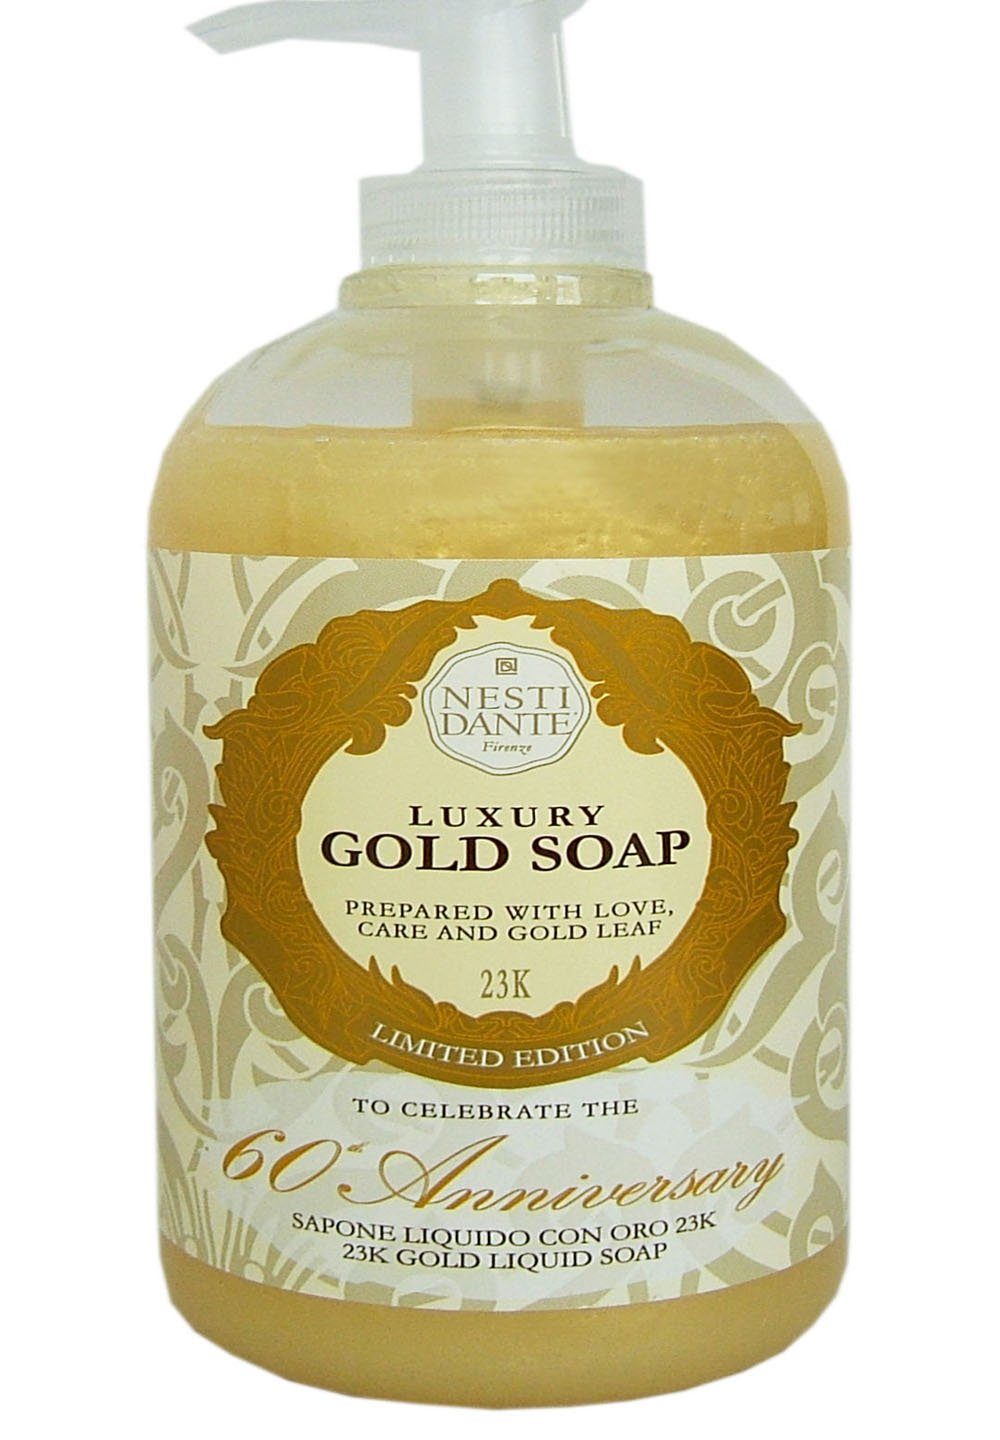 Nesti Dante Flüssigseife, Liquid Soap 60th Anniversary Gold Leaf 500 ml